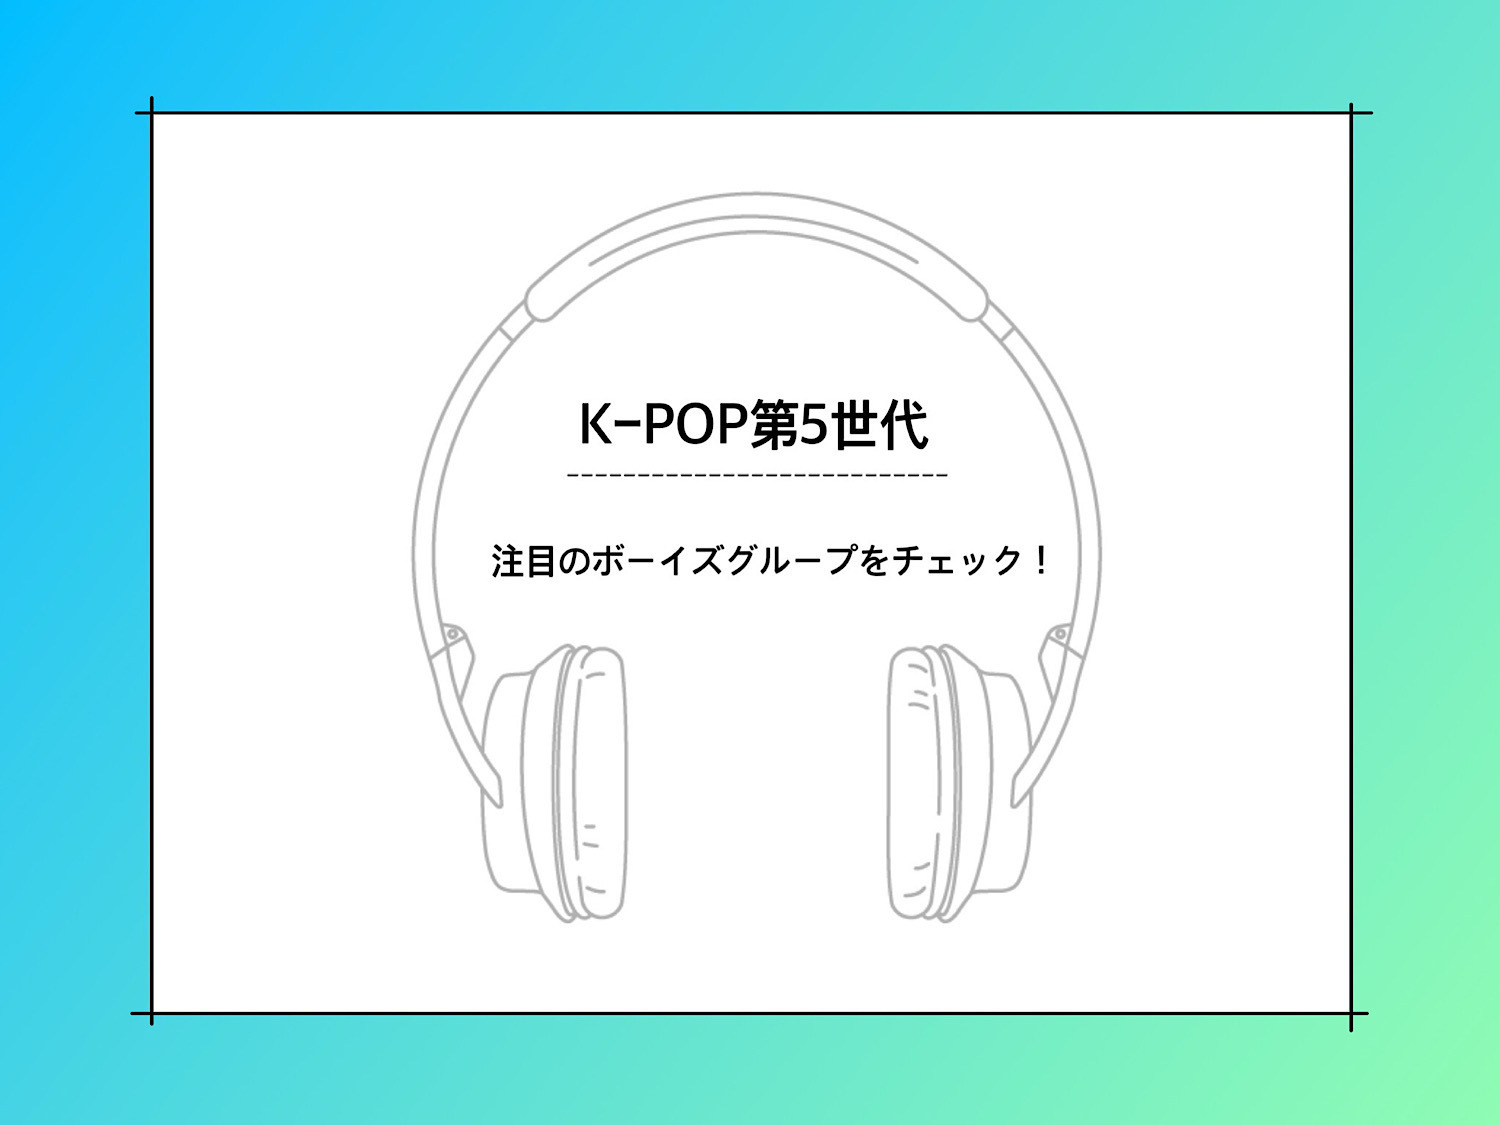 K-POP第5世代が到来！ ZB1、RIIZEら今注目すべきボーイズグループ4選【韓国カルチャー通信 #247】